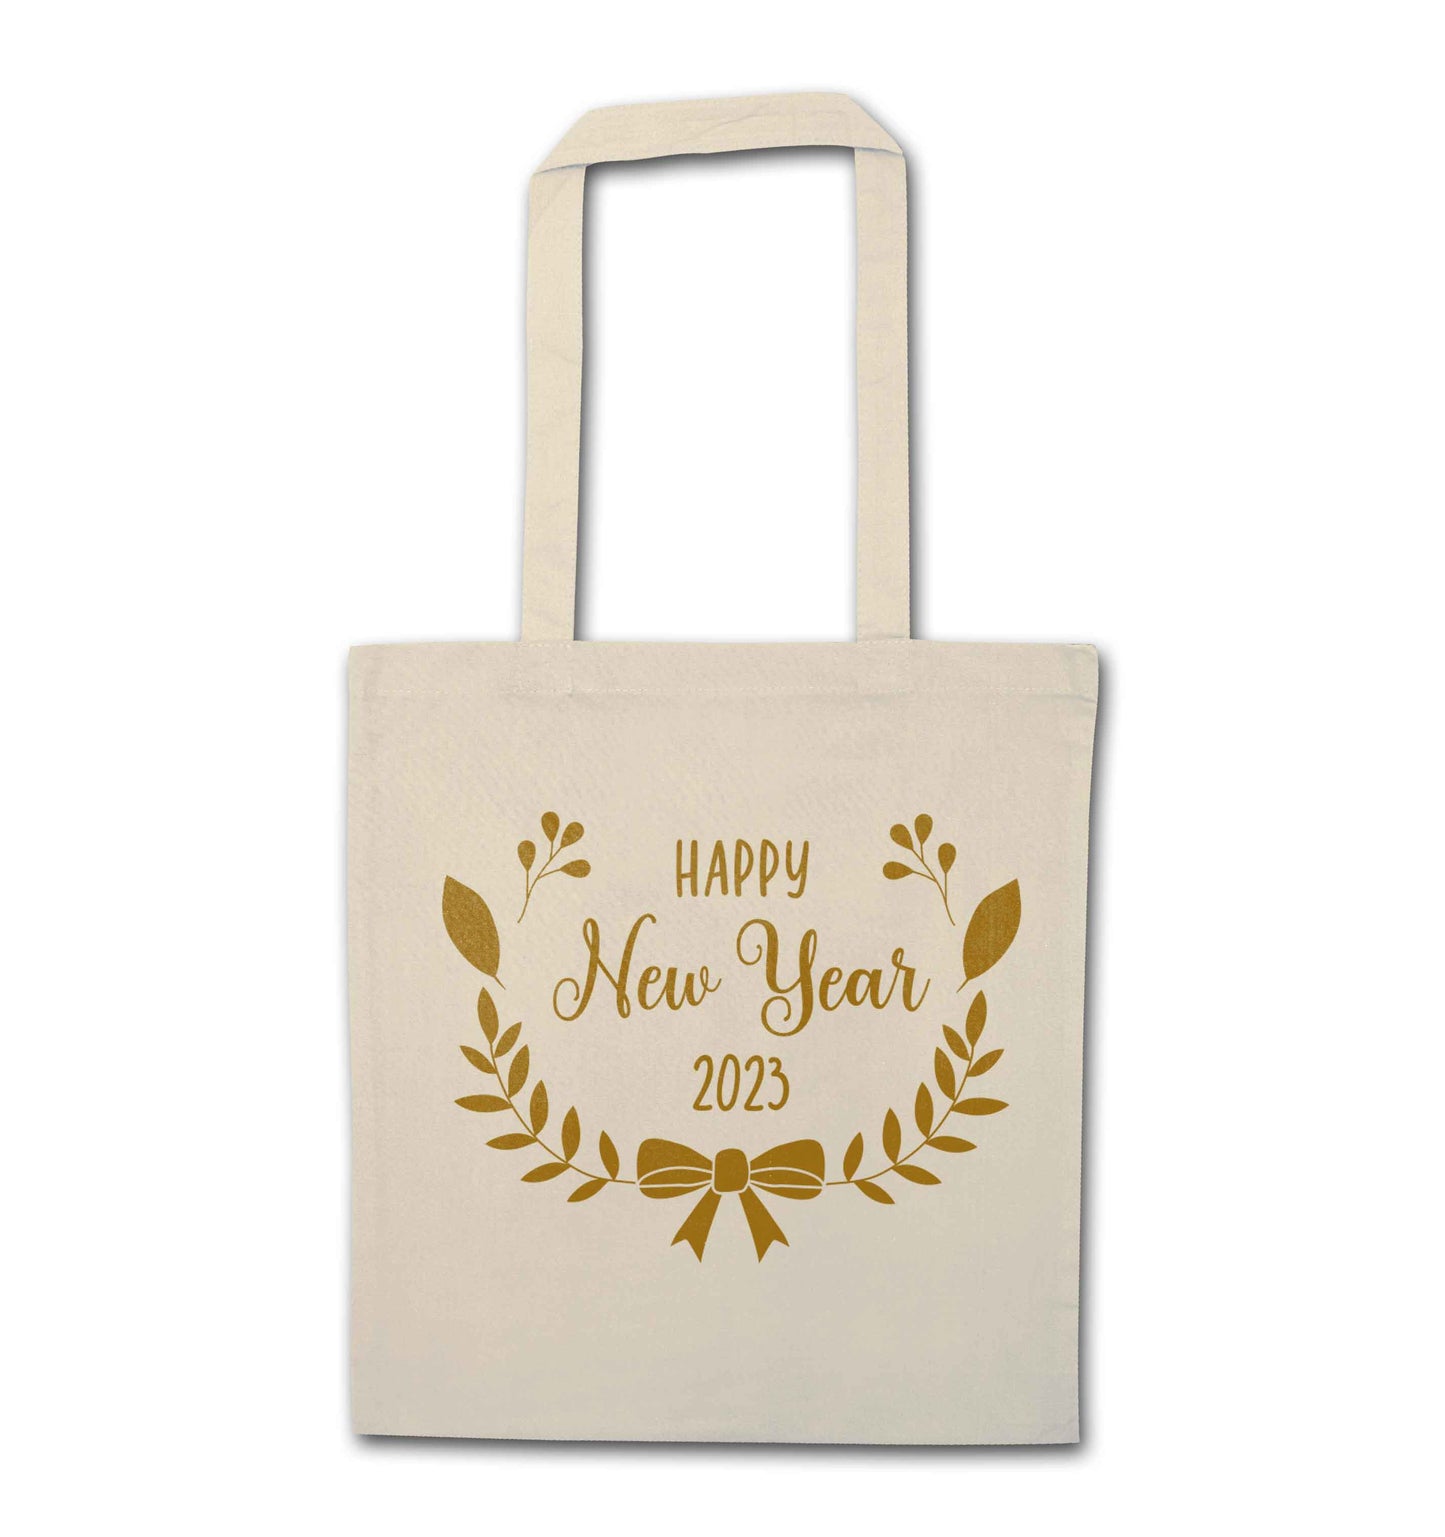 Happy New Year 2023 natural tote bag